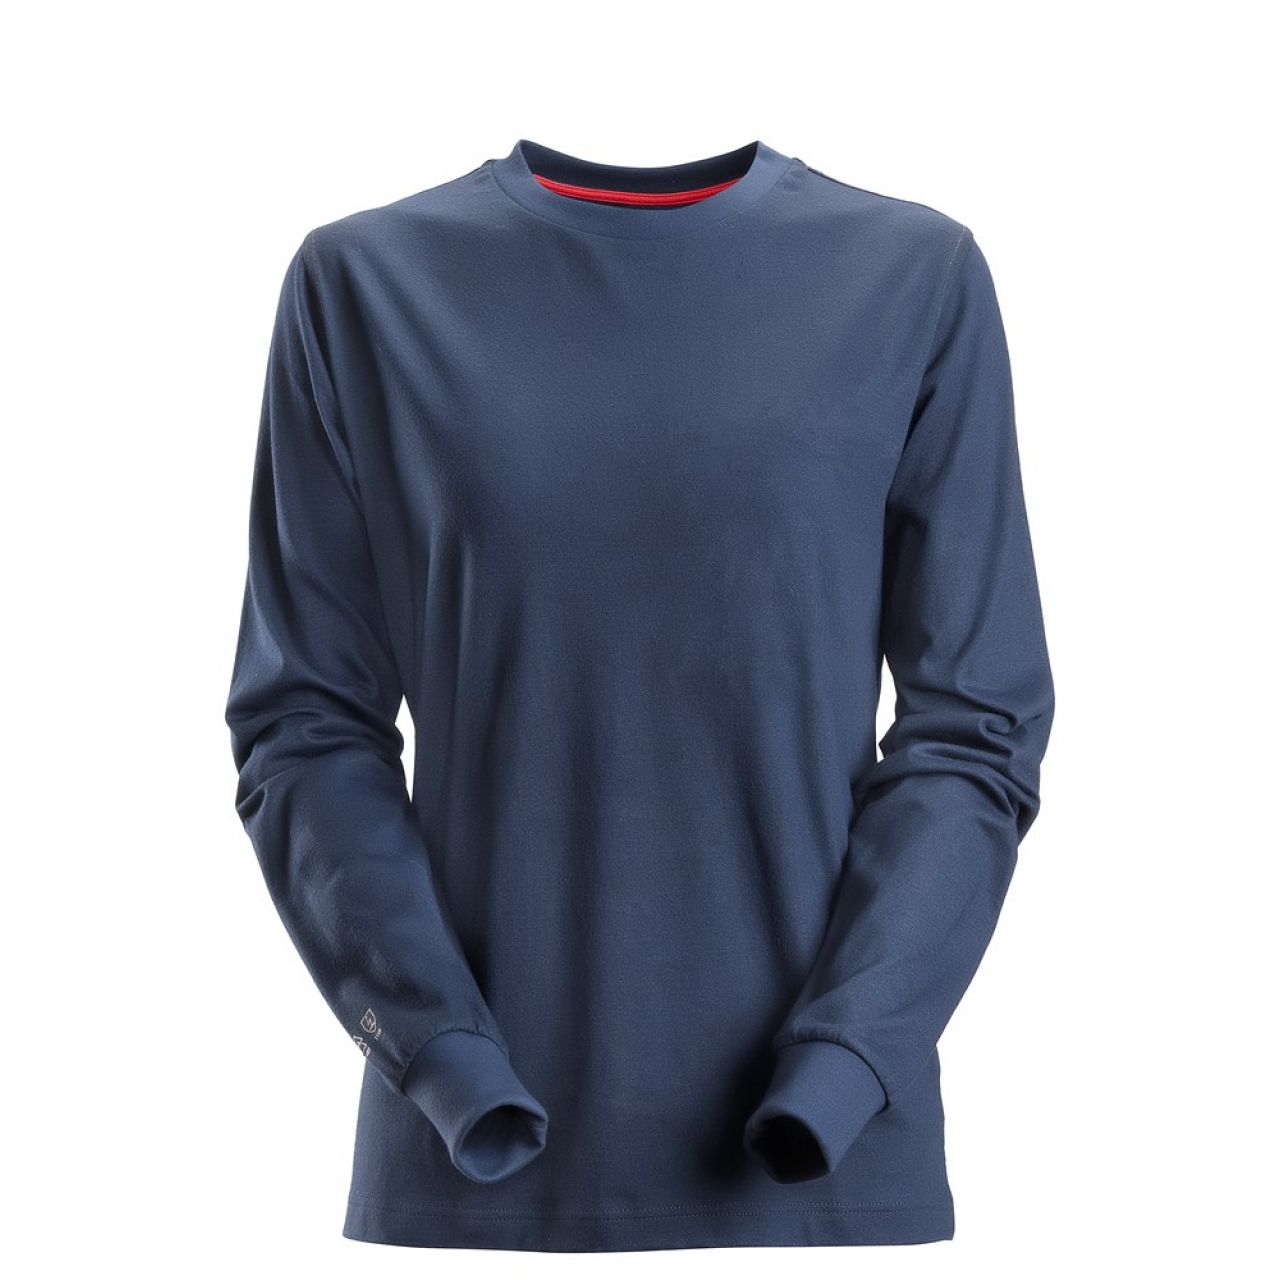 2467 Camiseta de manga larga para mujer ProtecWork azul marino talla L